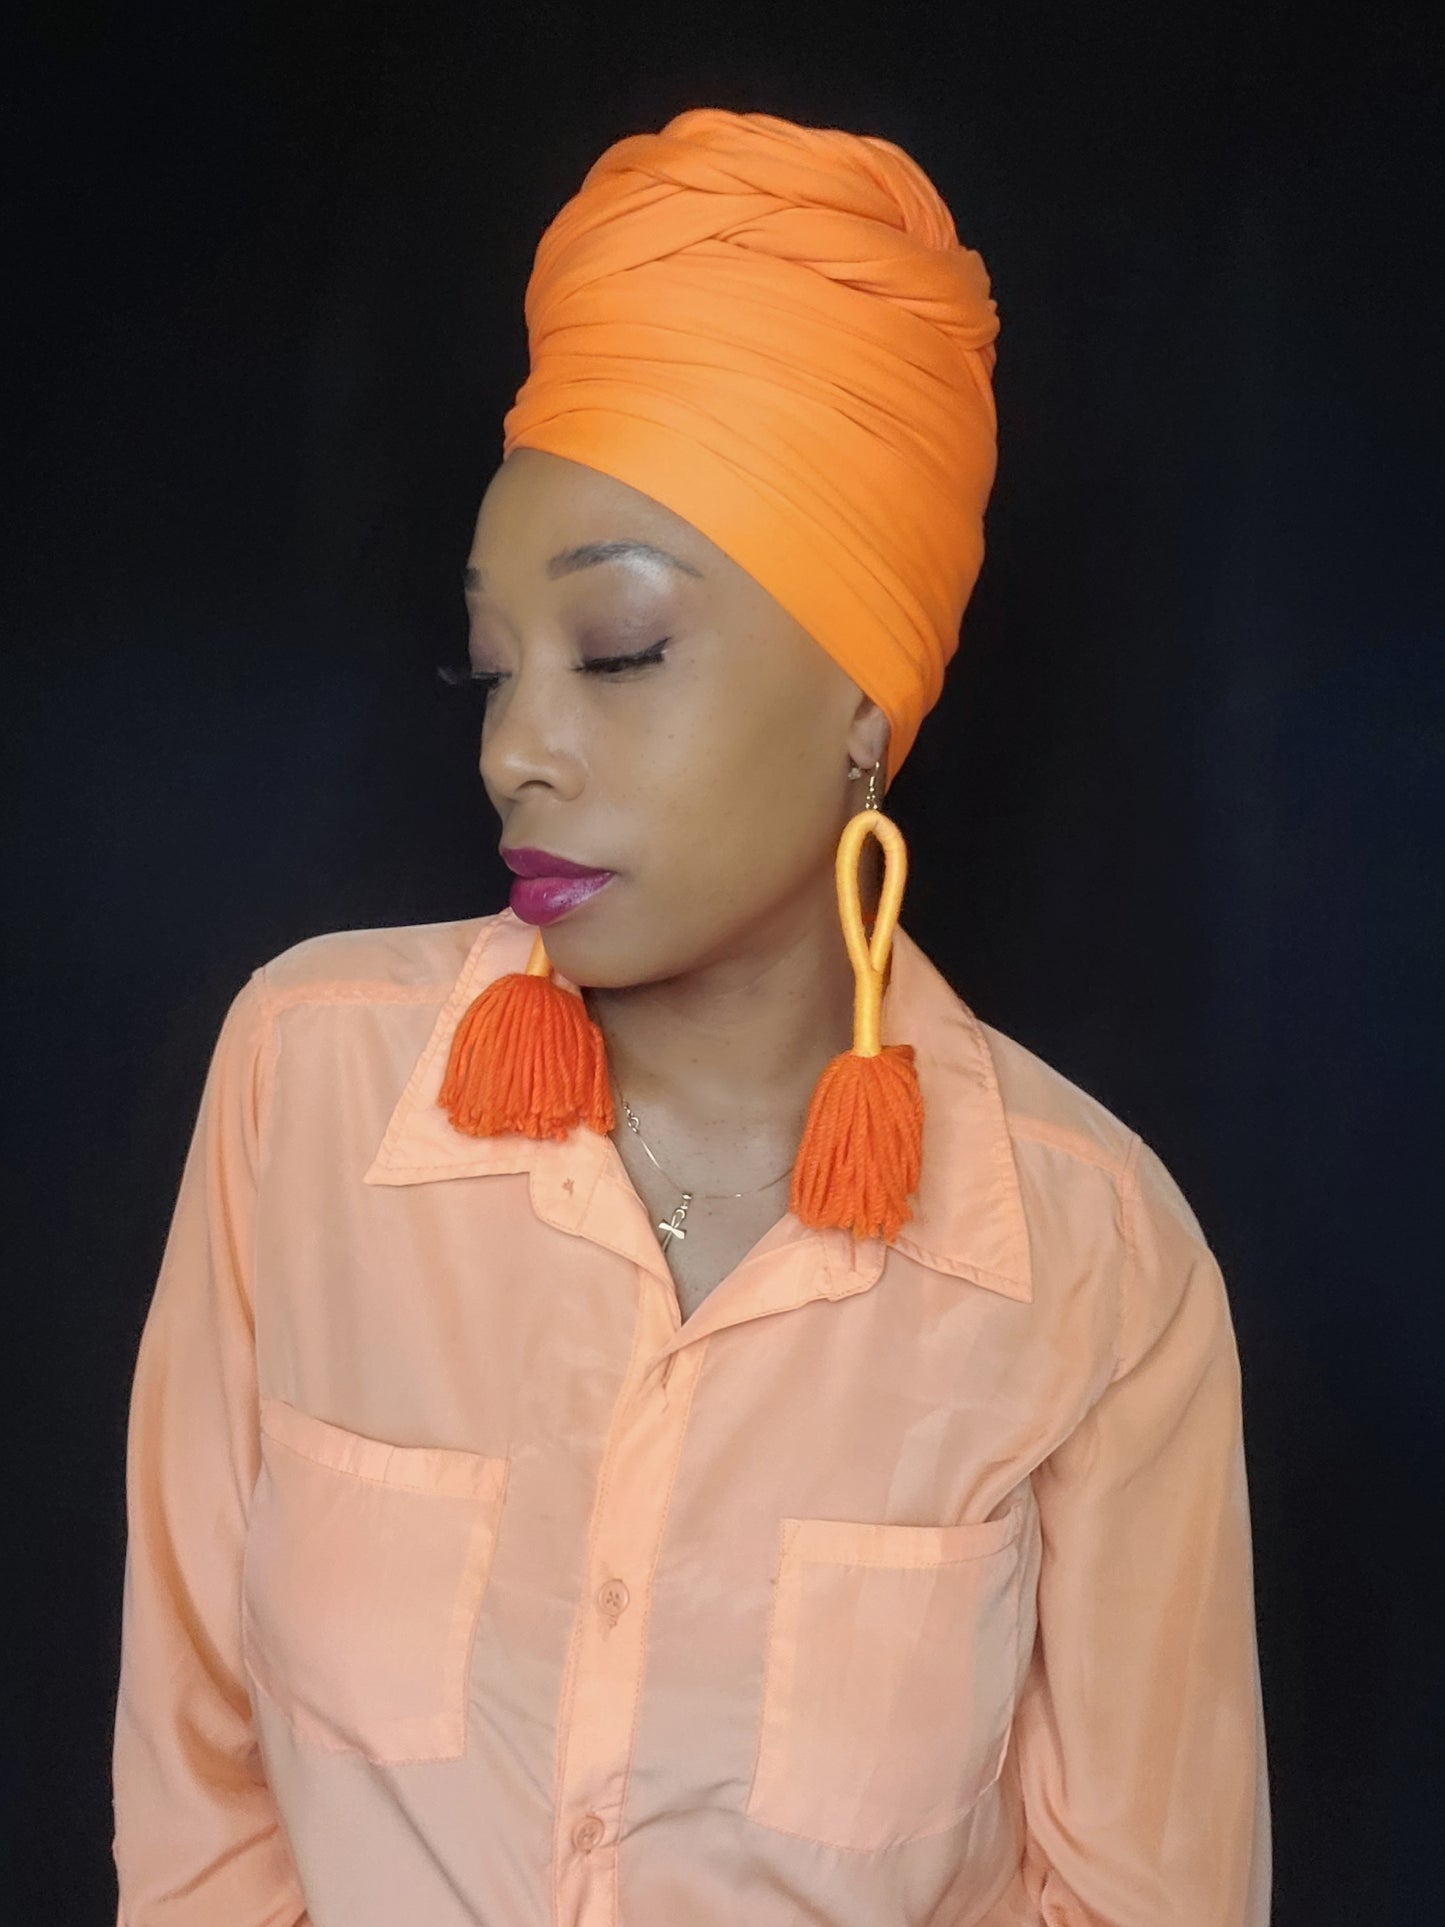 black woman wearing stretchy hot orange headwrap